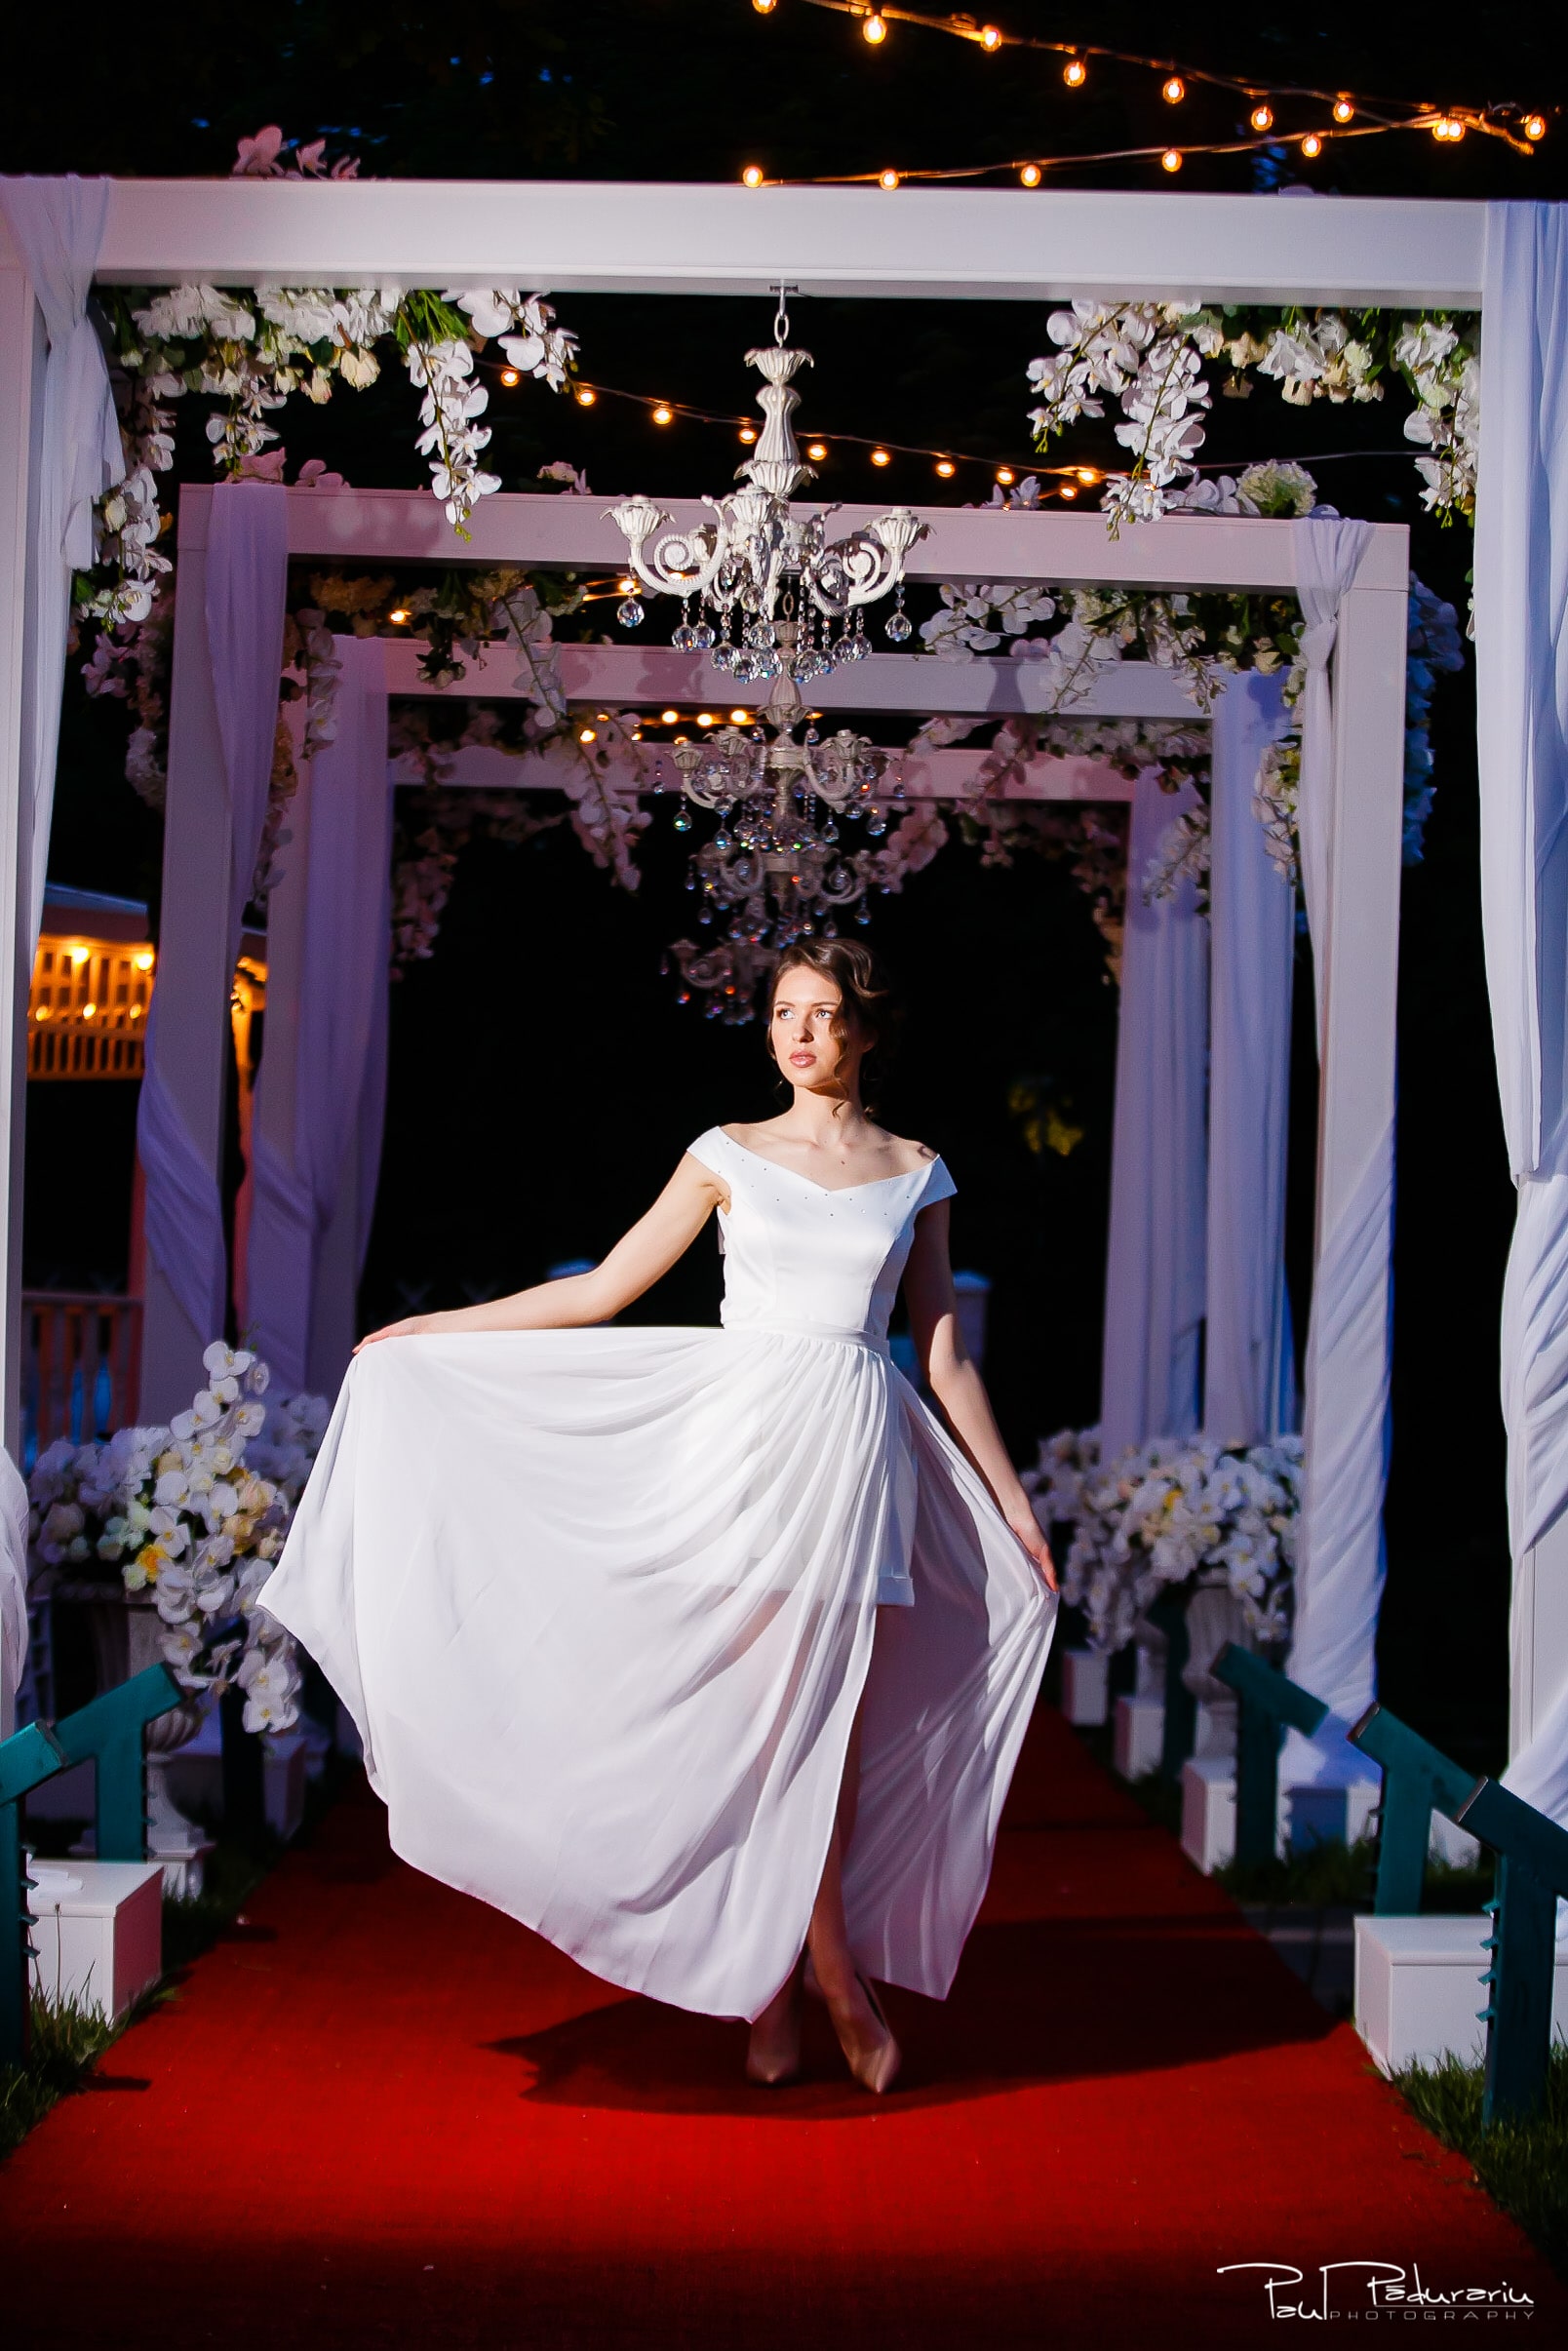 Modern Bride Edith Val colectie rochie mireasa 2019 - fotograf profesionist iasi paul padurariu | nunta iasi 16